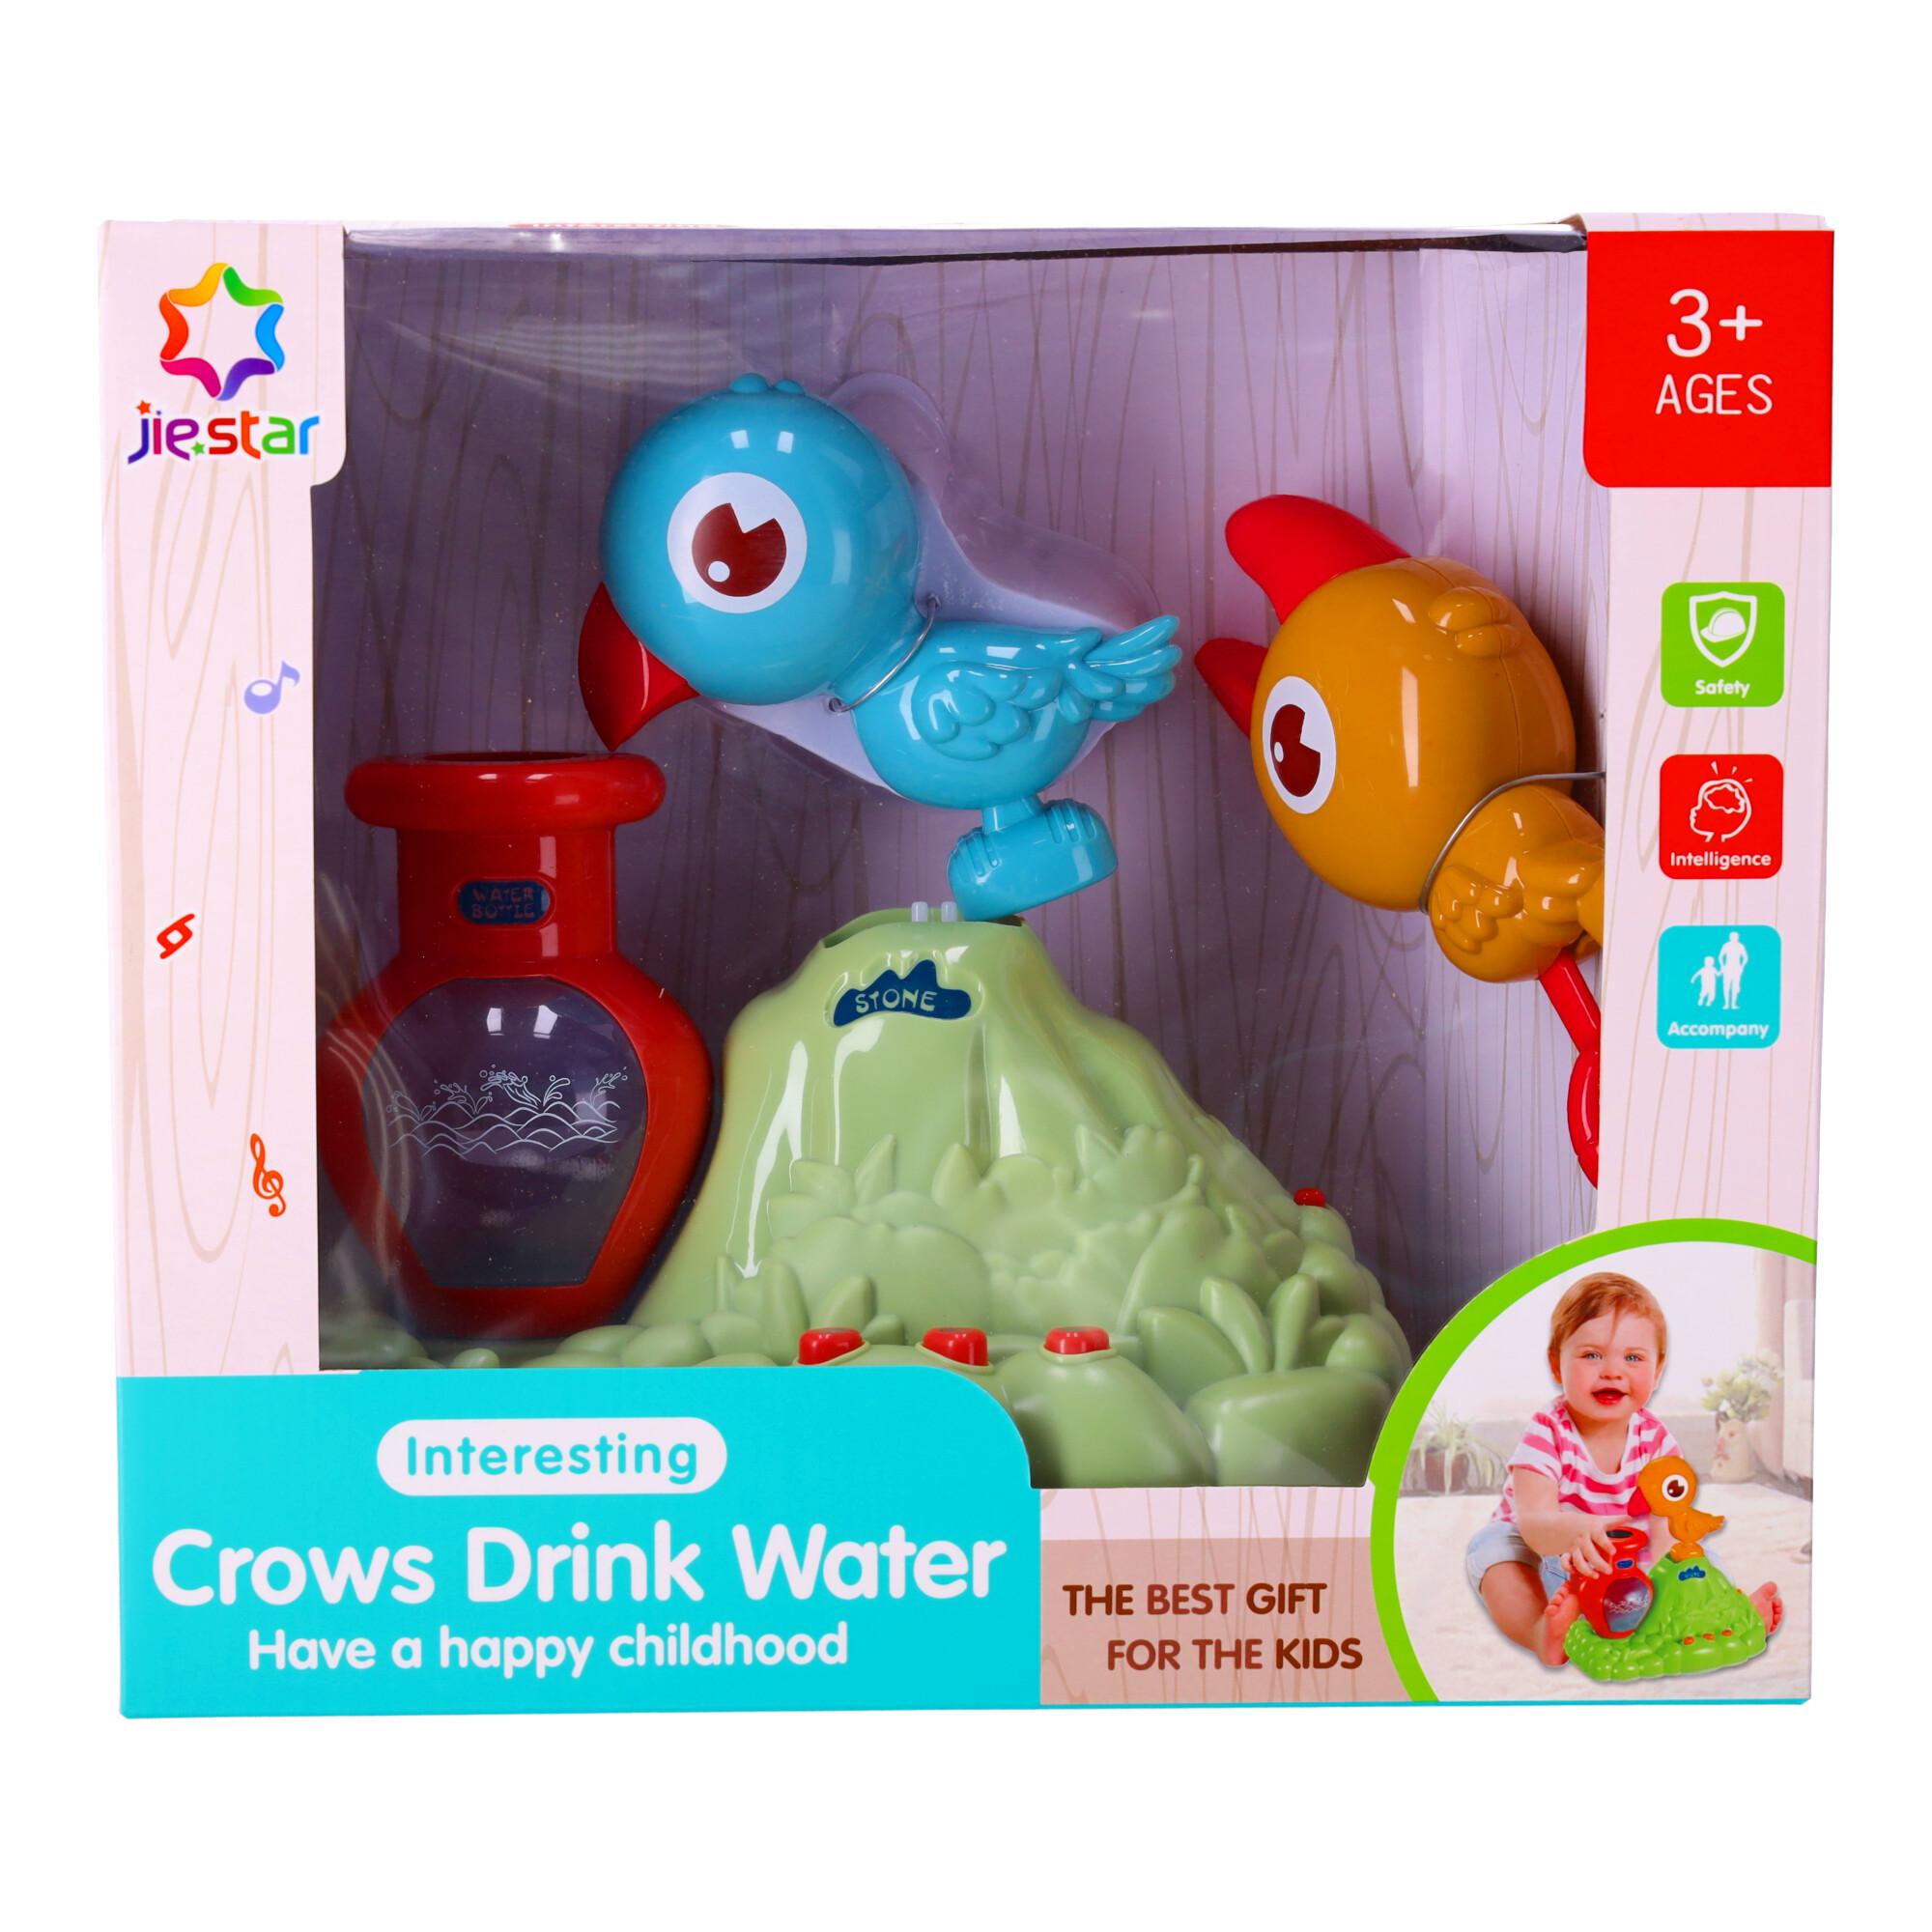 Crow drinks water set toy-model